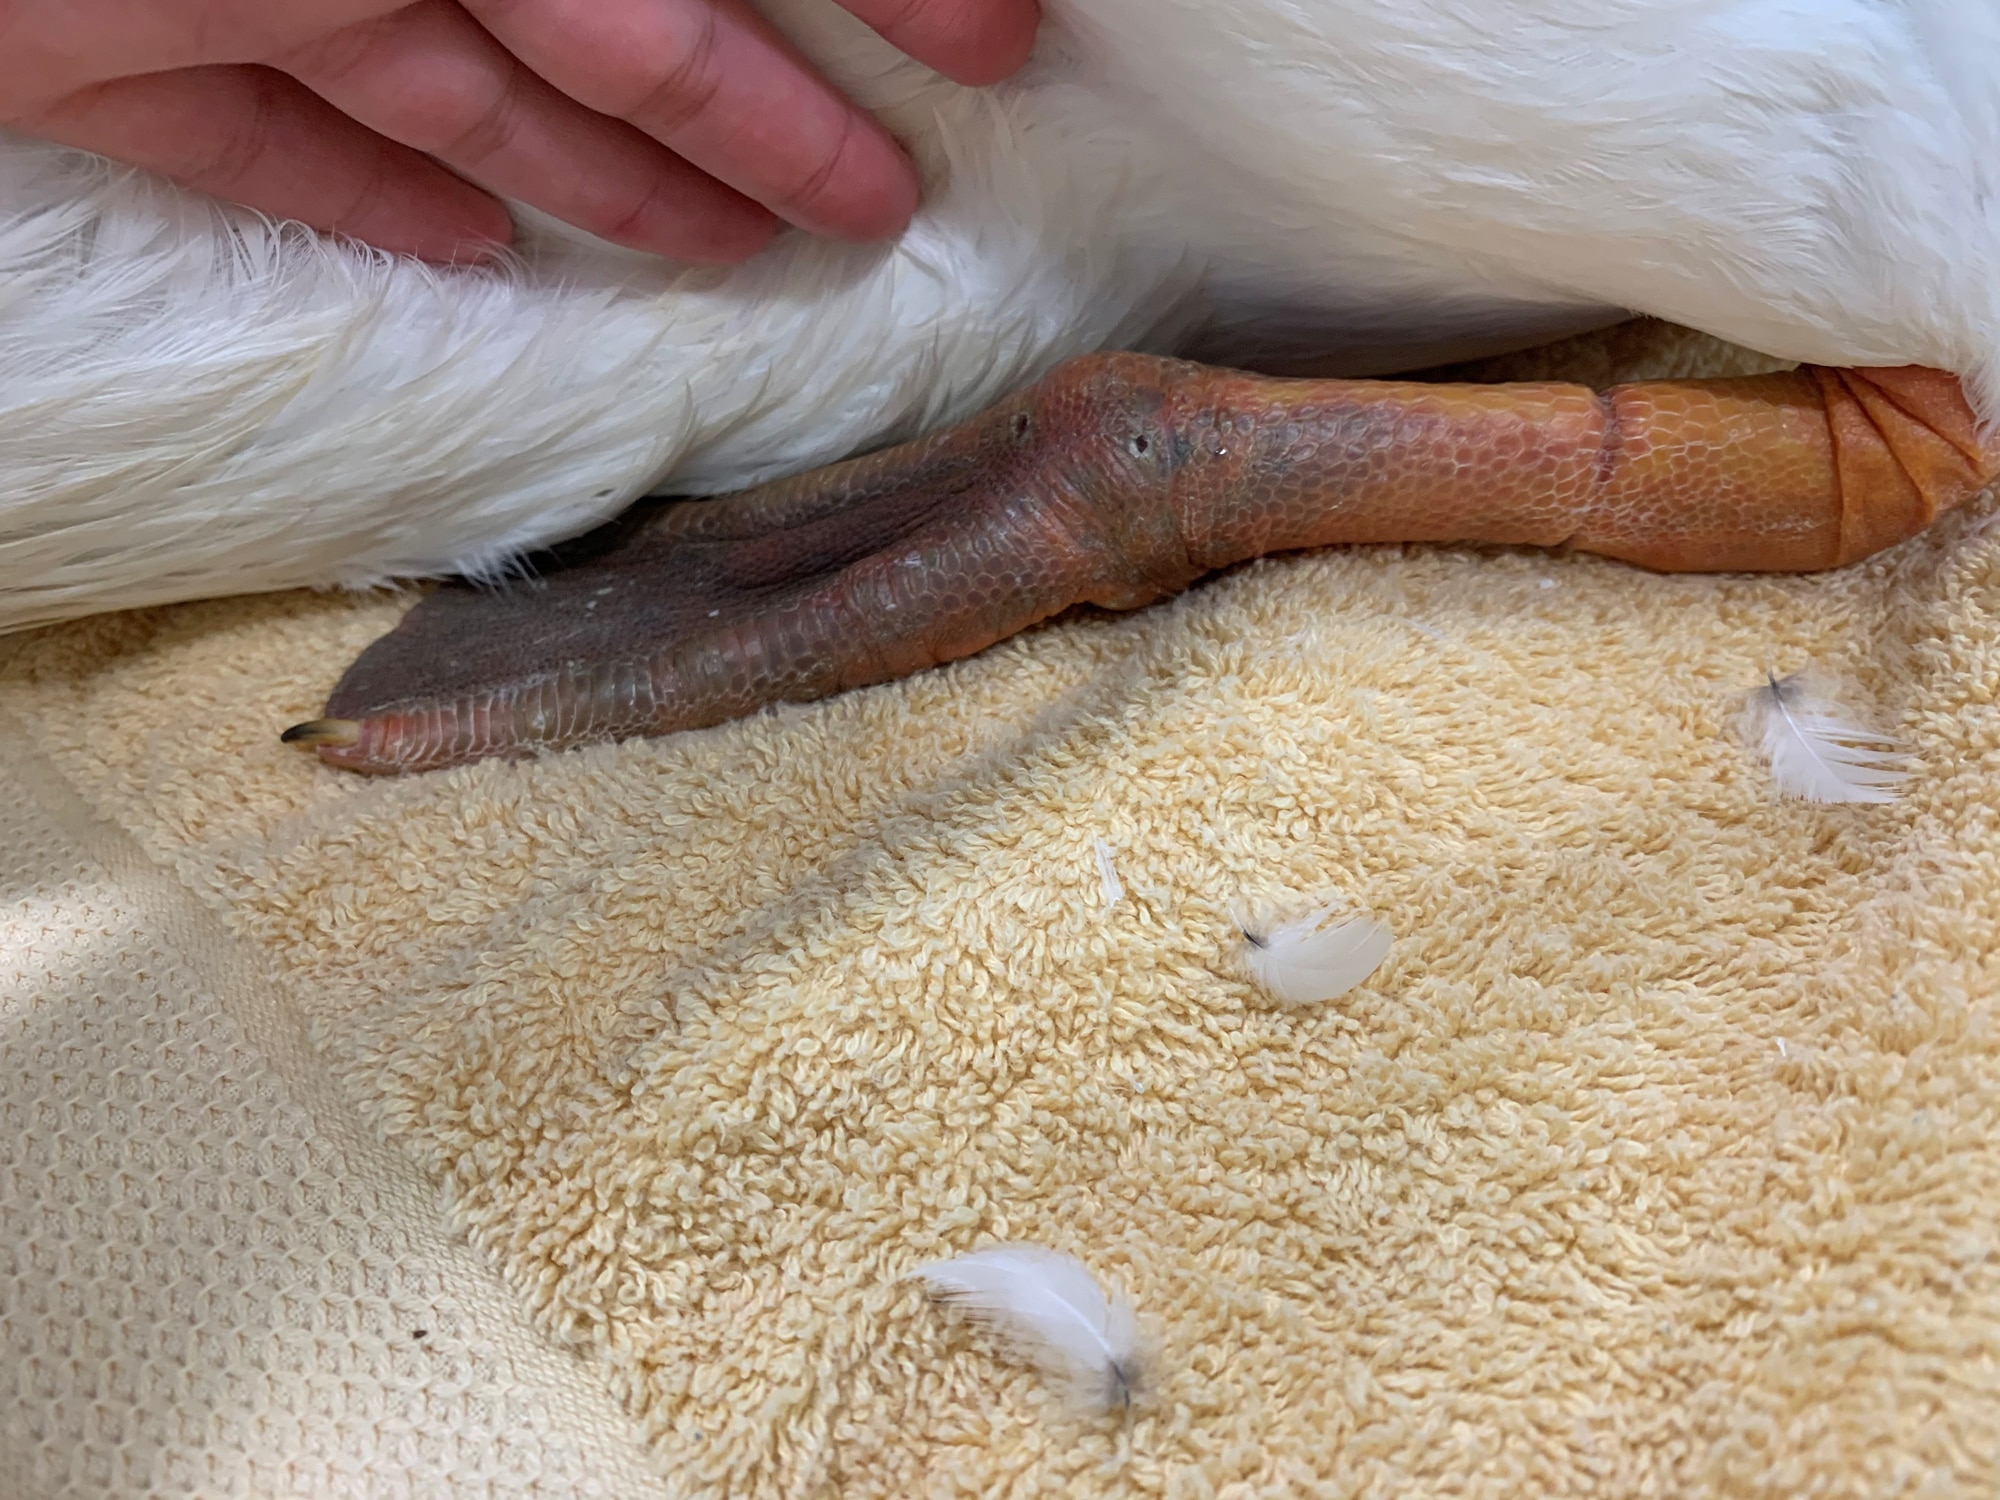 White Pelican leg